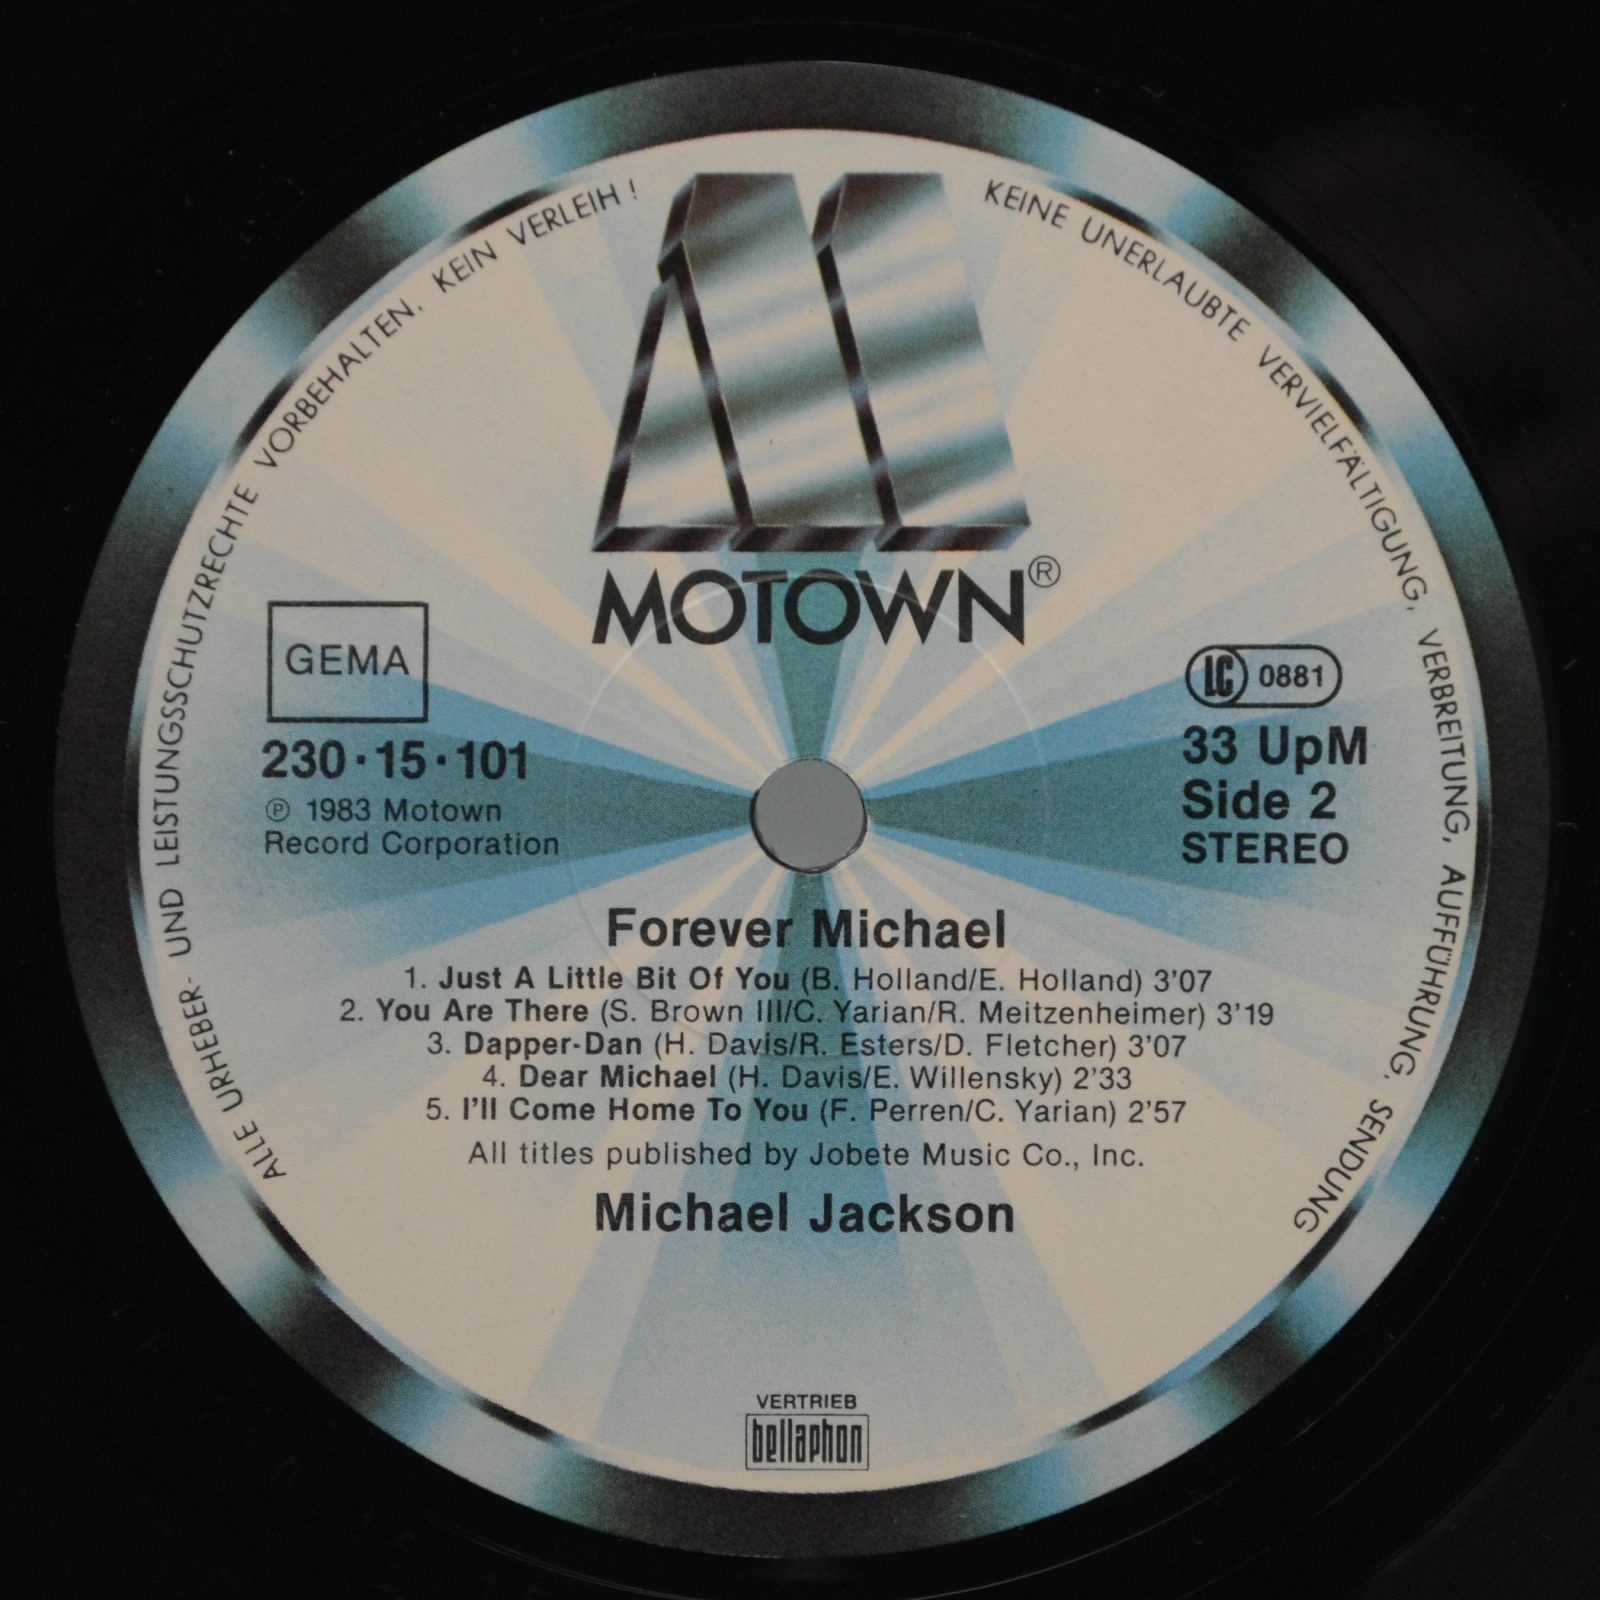 Michael Jackson — Forever, Michael, 1983